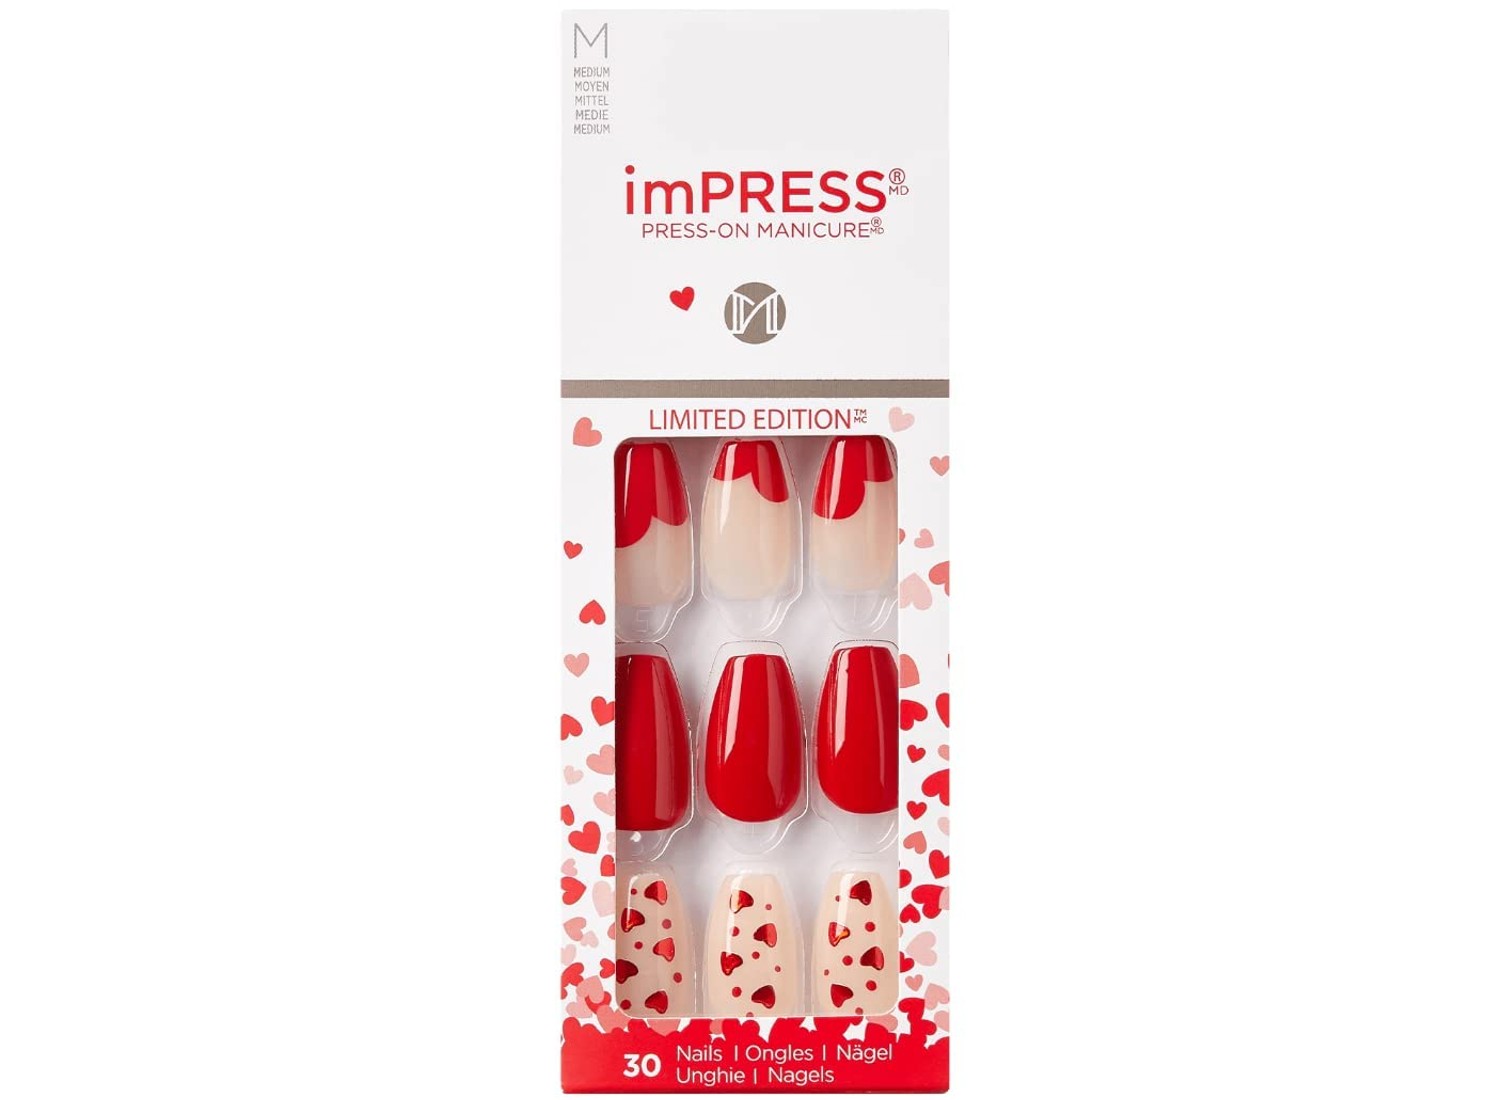 ImPress Always & Forever Press-On Nails